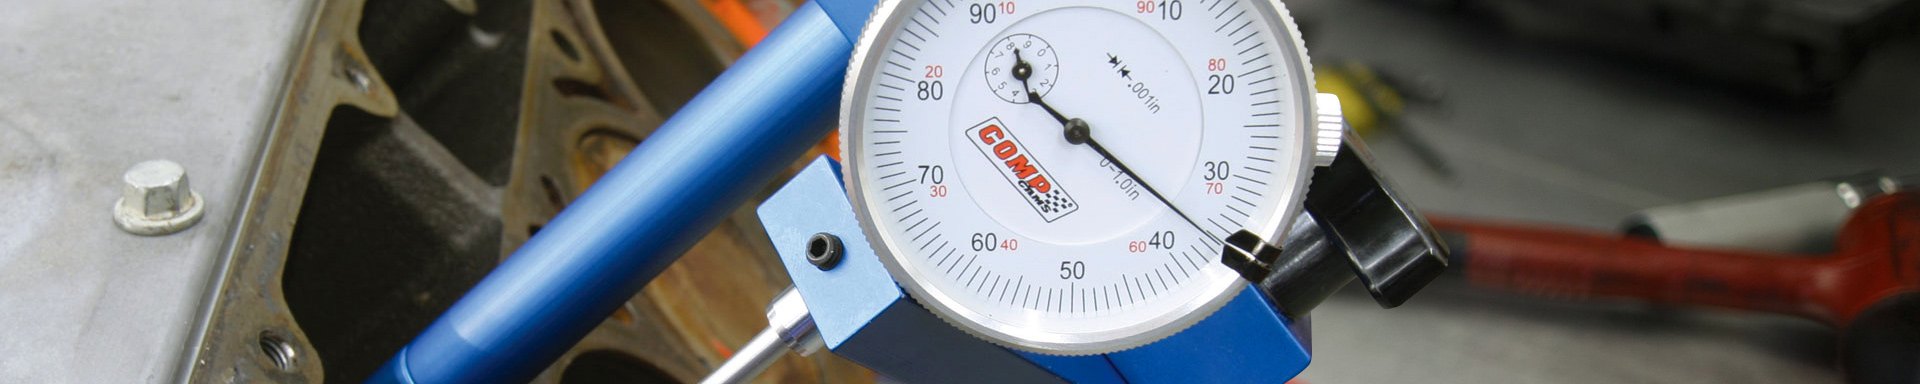 COMP Cams Precision Measuring Tools